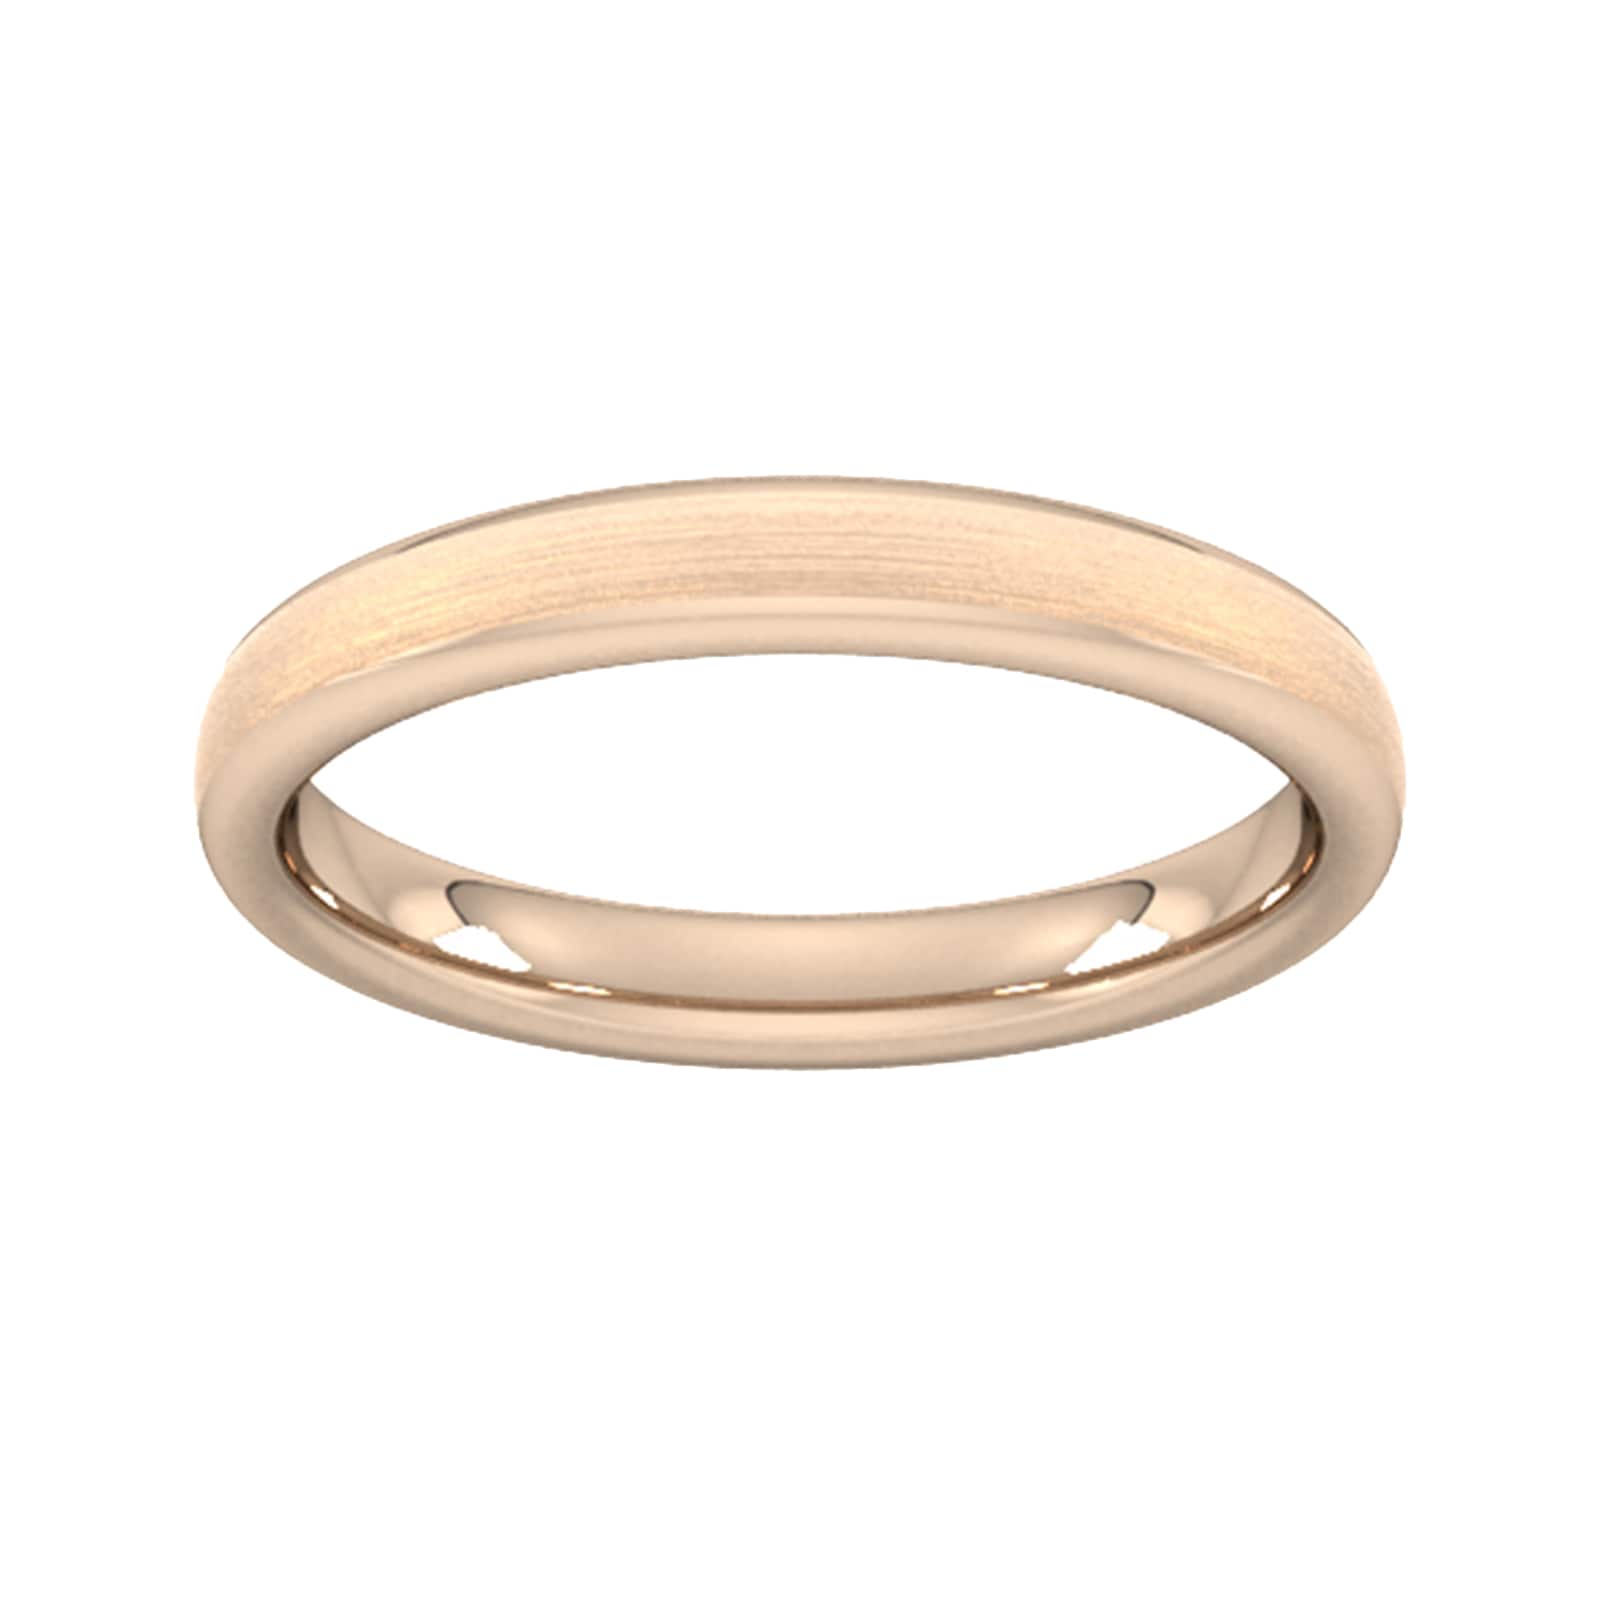 3mm Slight Court Heavy Matt Finished Wedding Ring In 18 Carat Rose Gold - Ring Size J